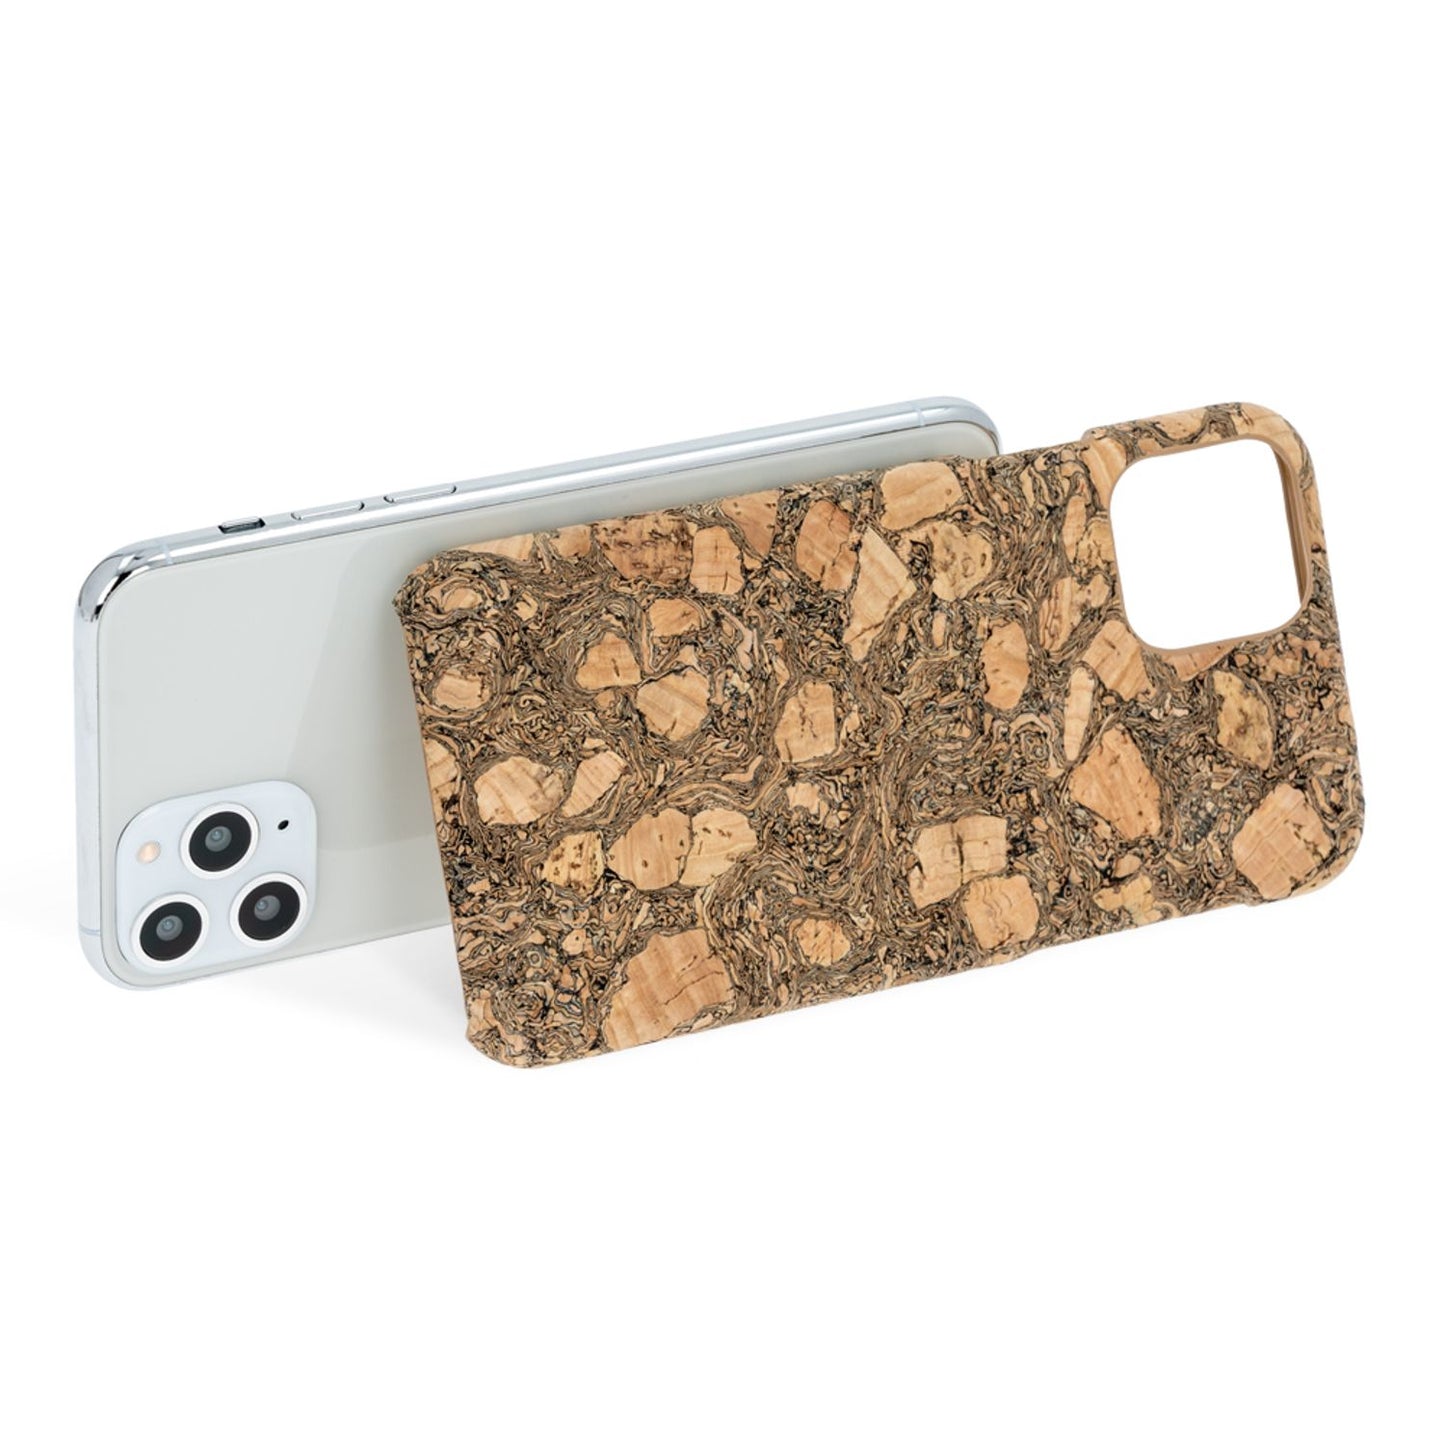 NALIA Kork Handy Hülle kompatibel mit iPhone 11 Pro, Natur-Holz Hard Case Cover